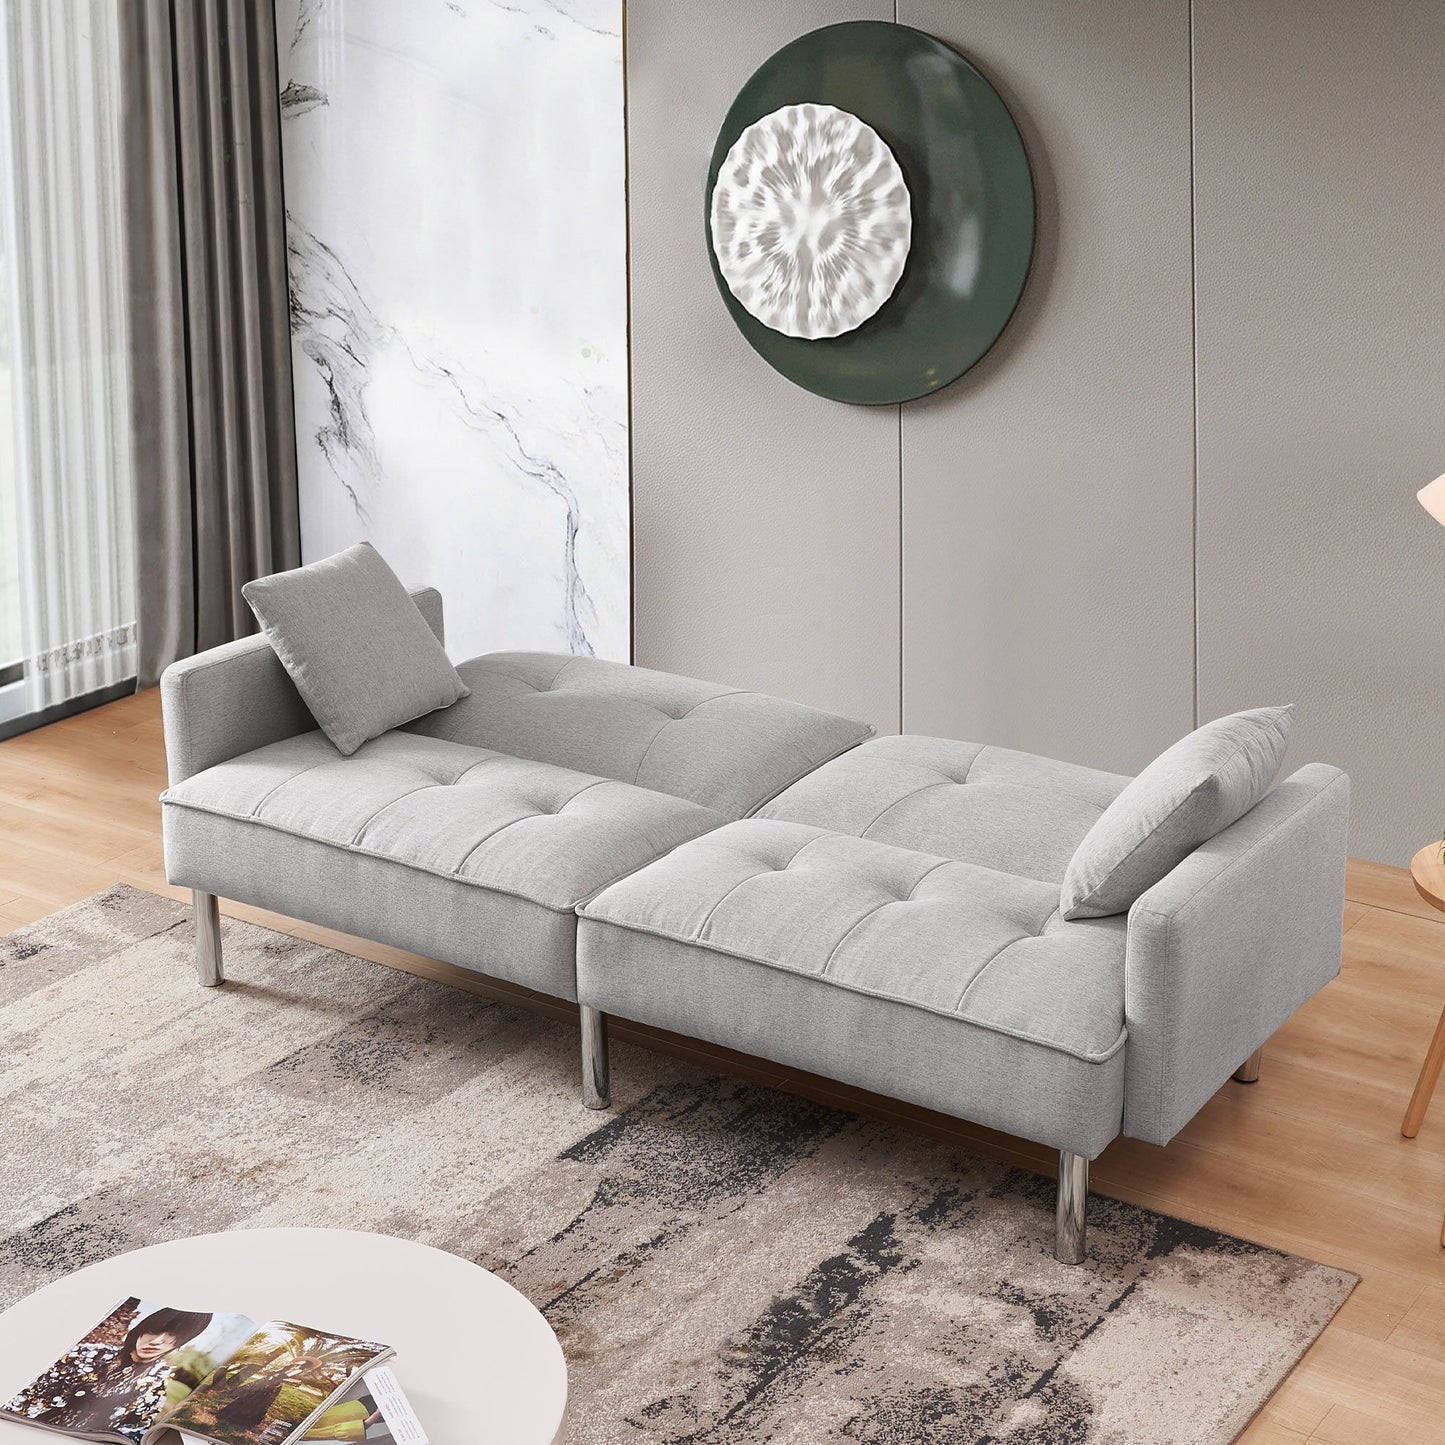 85" Light Gray Polyester Blend Convertible Futon Sleeper Sofa And Toss Pillows With Silver Legs